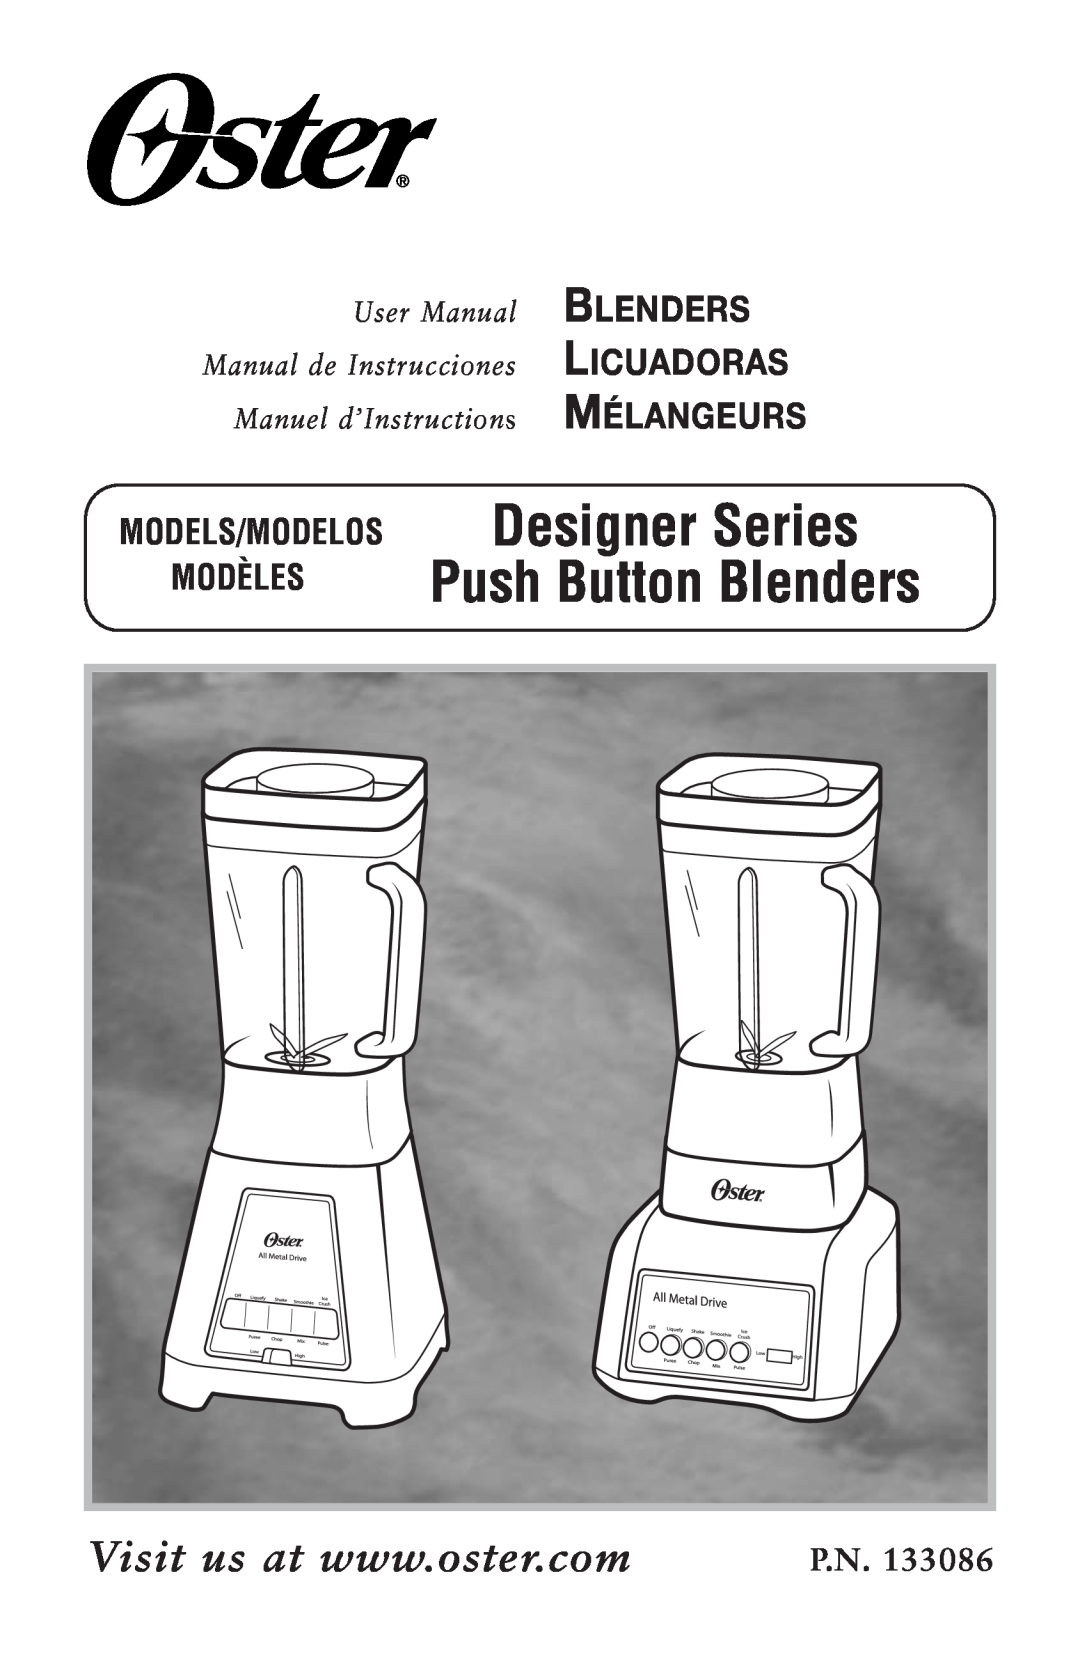 Oster P.N. 133086 user manual Blenders Licuadoras Mélangeurs, Designer Series Push Button Blenders, Modèles 